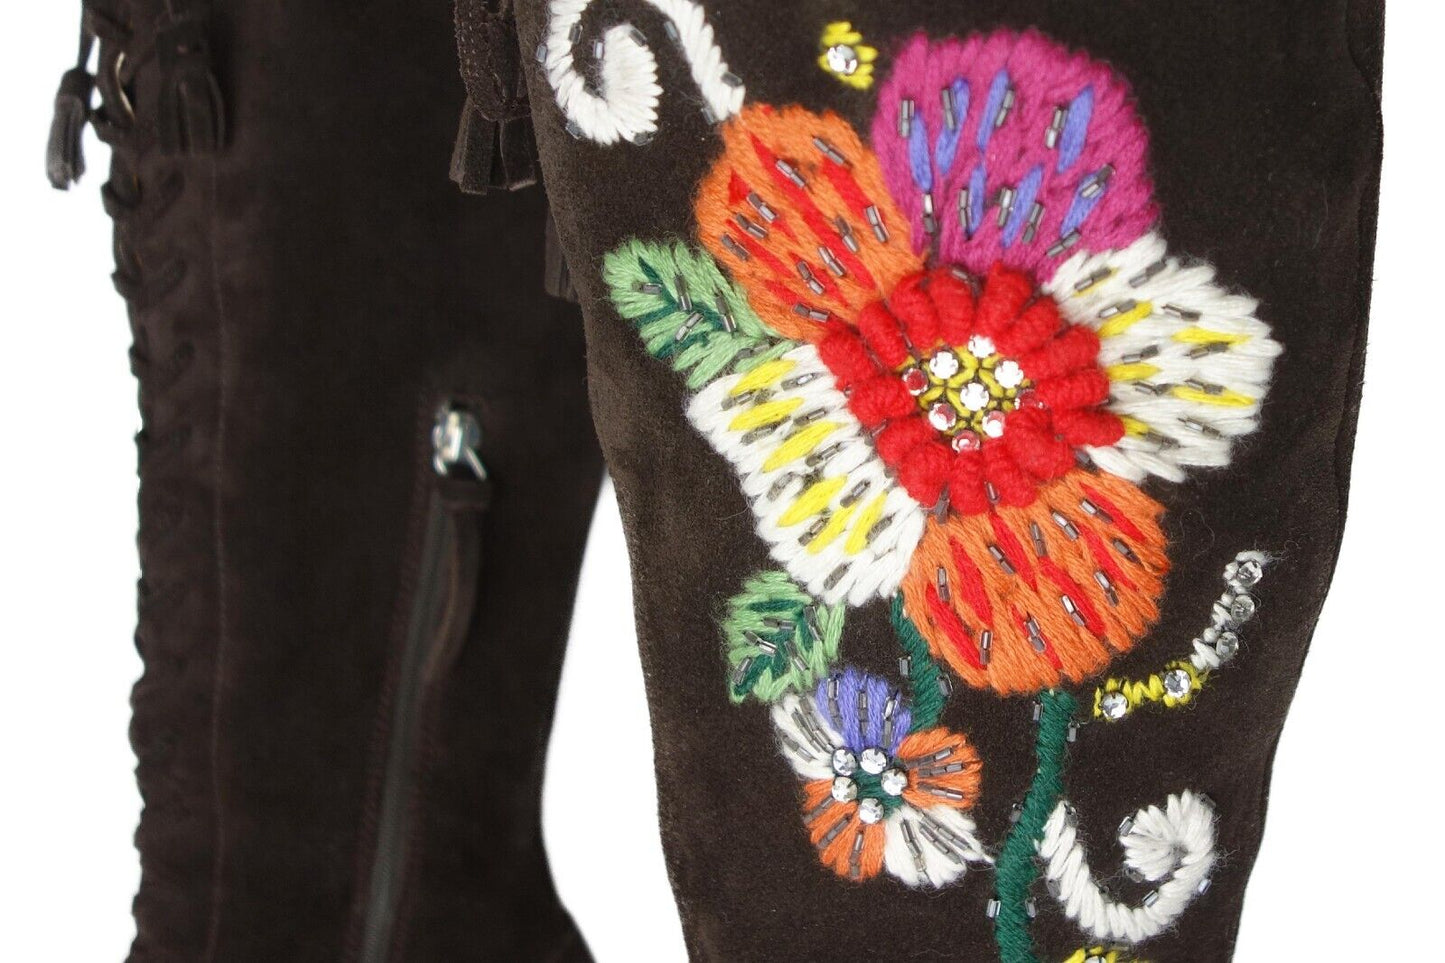 MIU MIU Vintage Floral Embroidered Suede Dark Brown Boots Sequins Heels Boho 70s